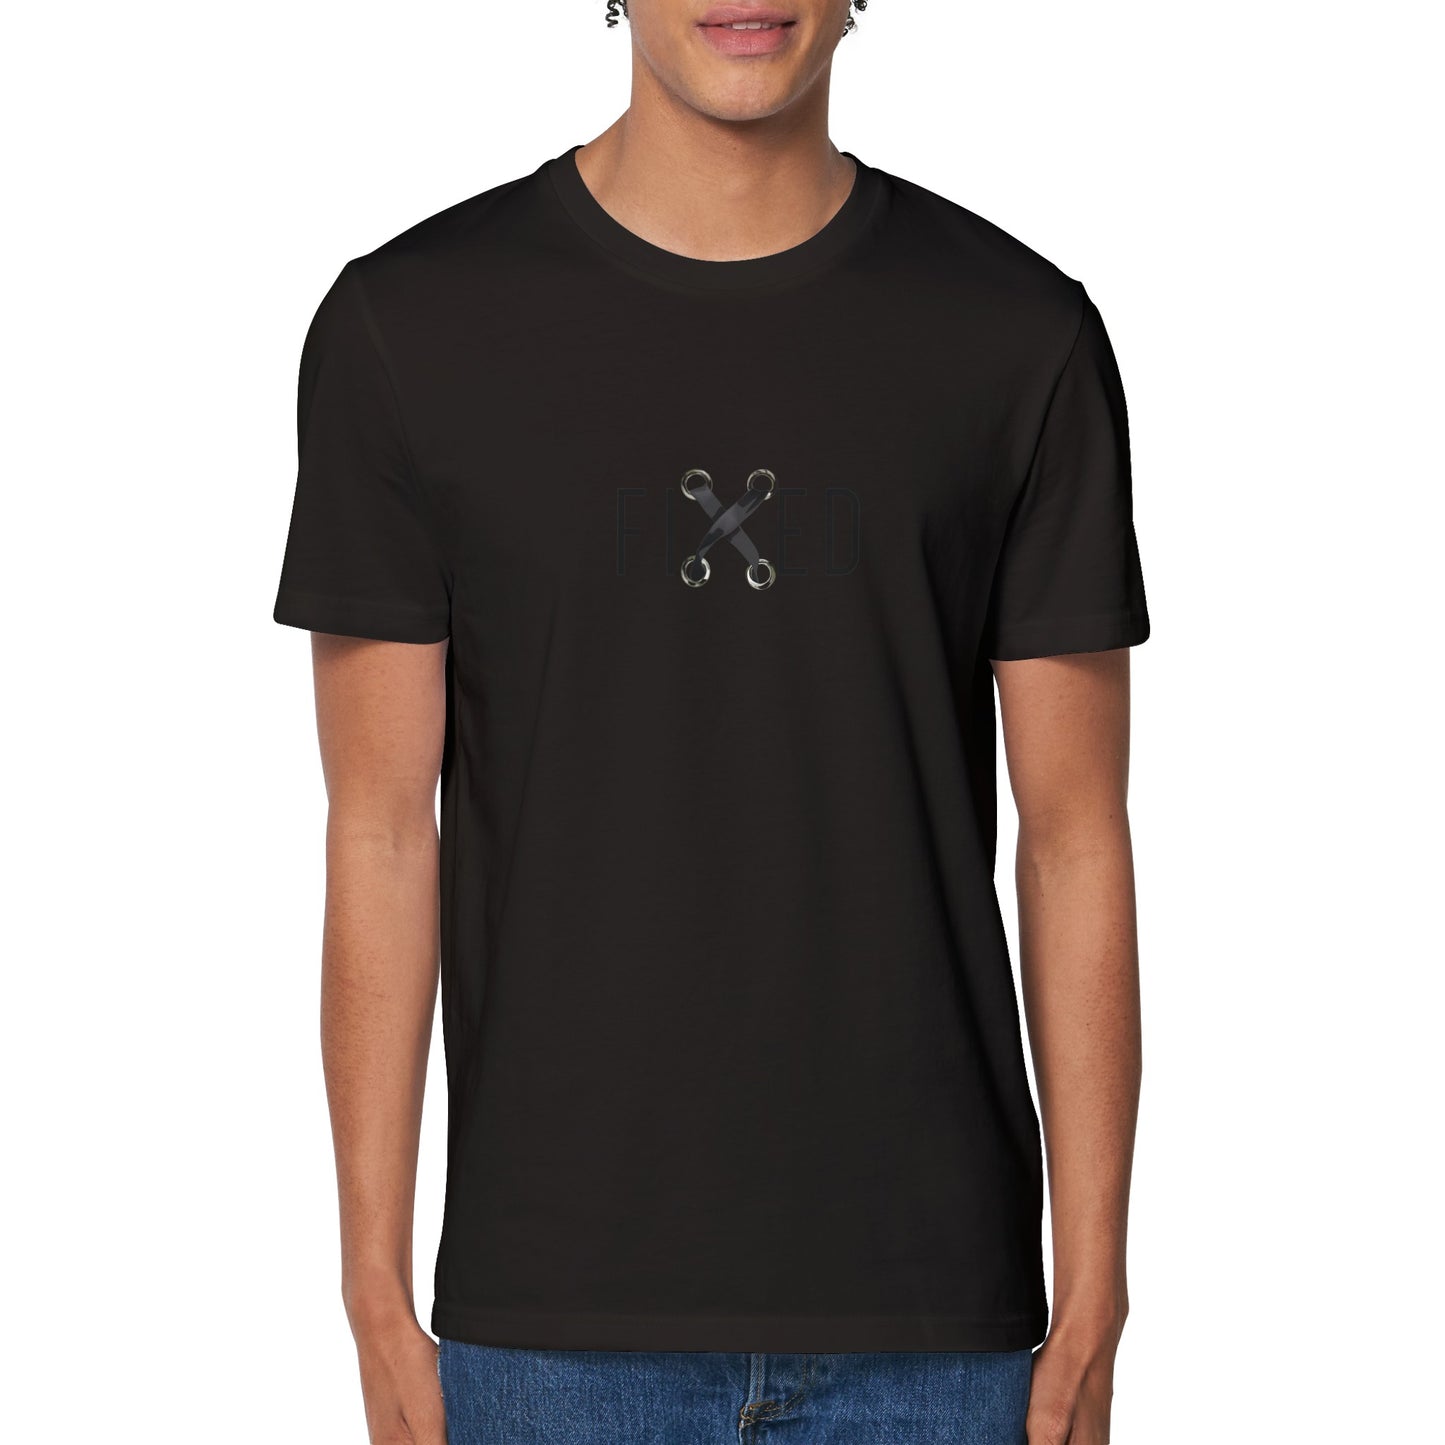 100% Organic Unisex T-shirt/Fixed